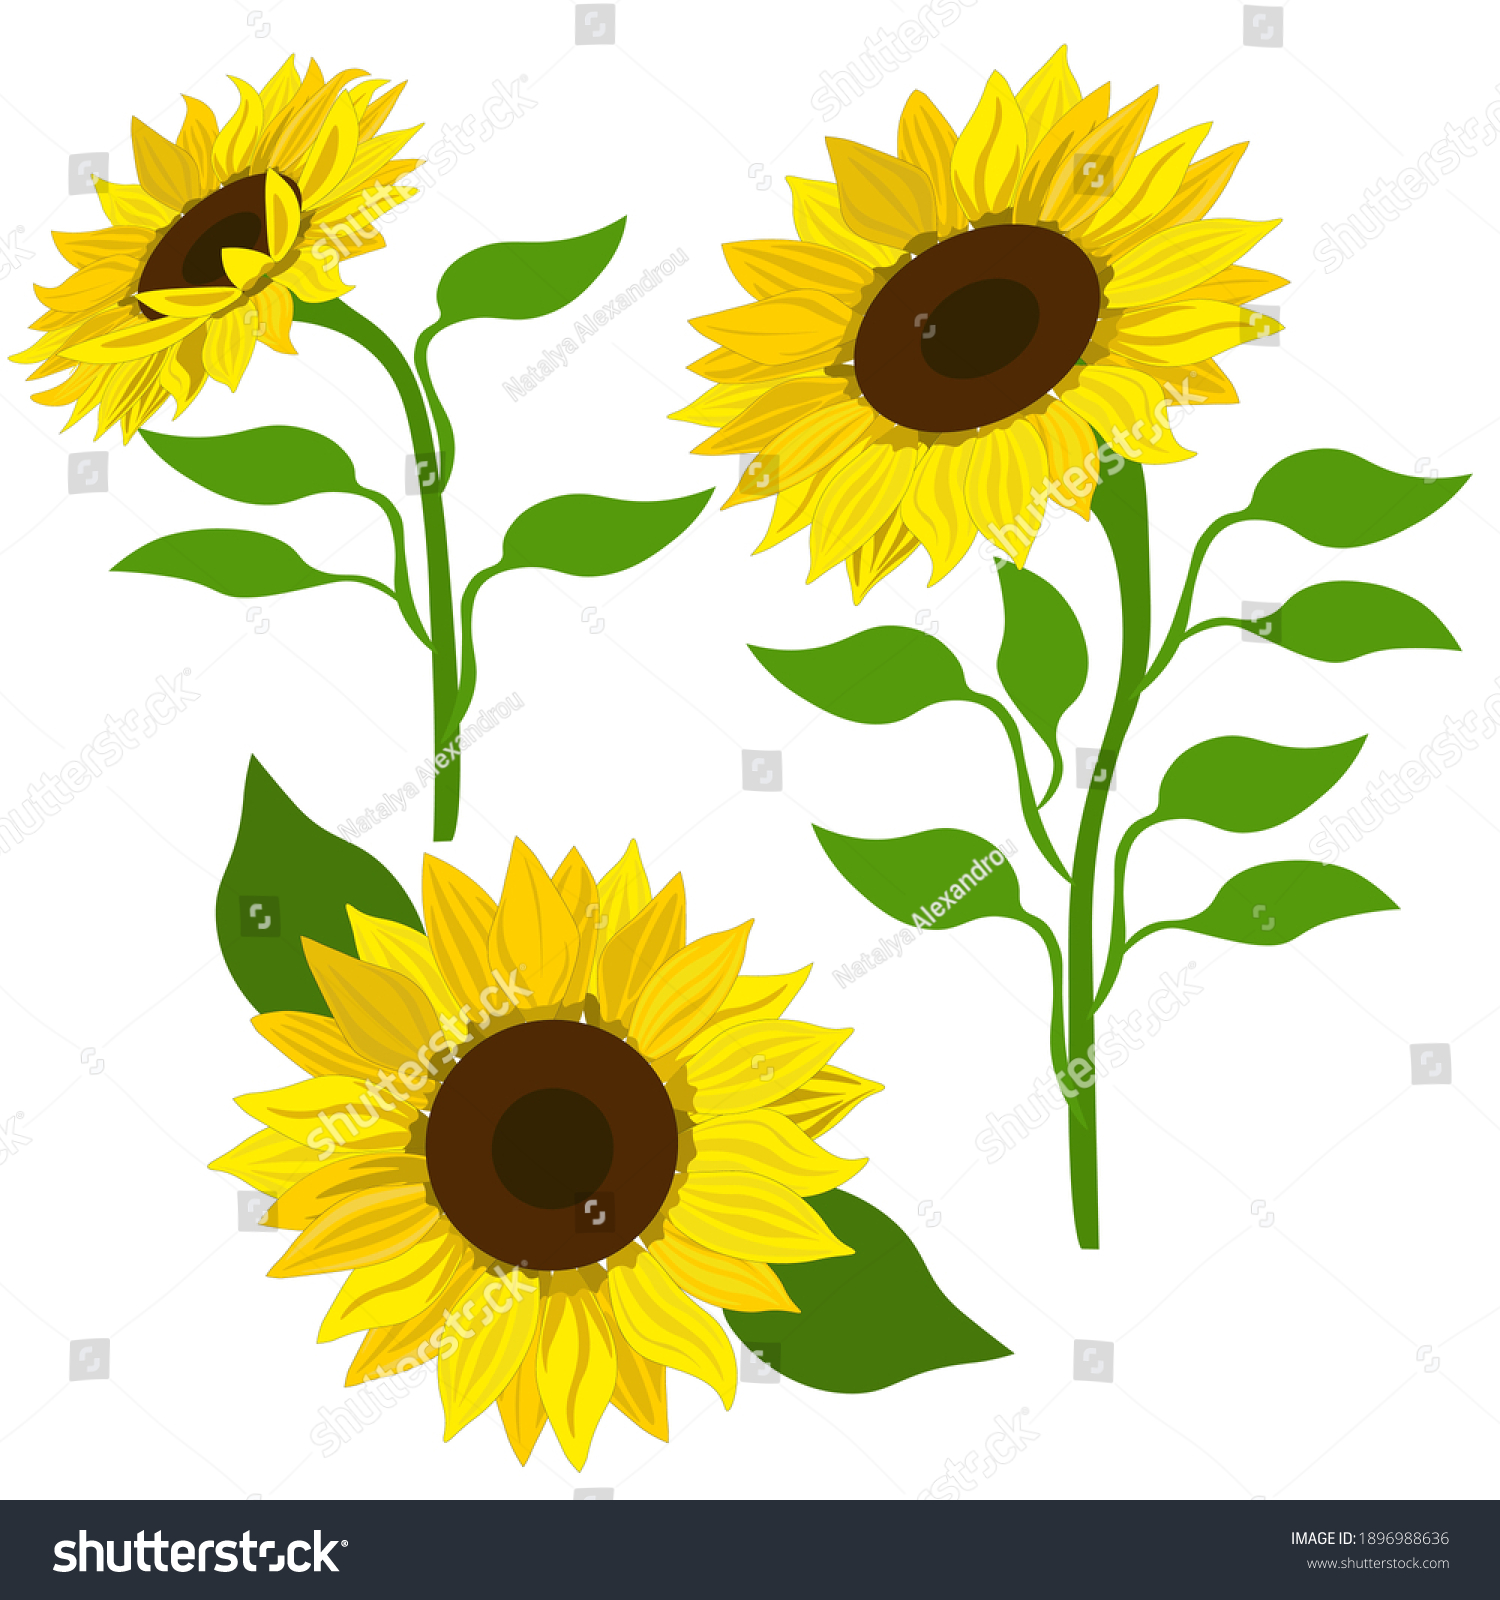 Clip Art Sunflowers Vector Sunflowers Set Stock Vector (Royalty Free ...